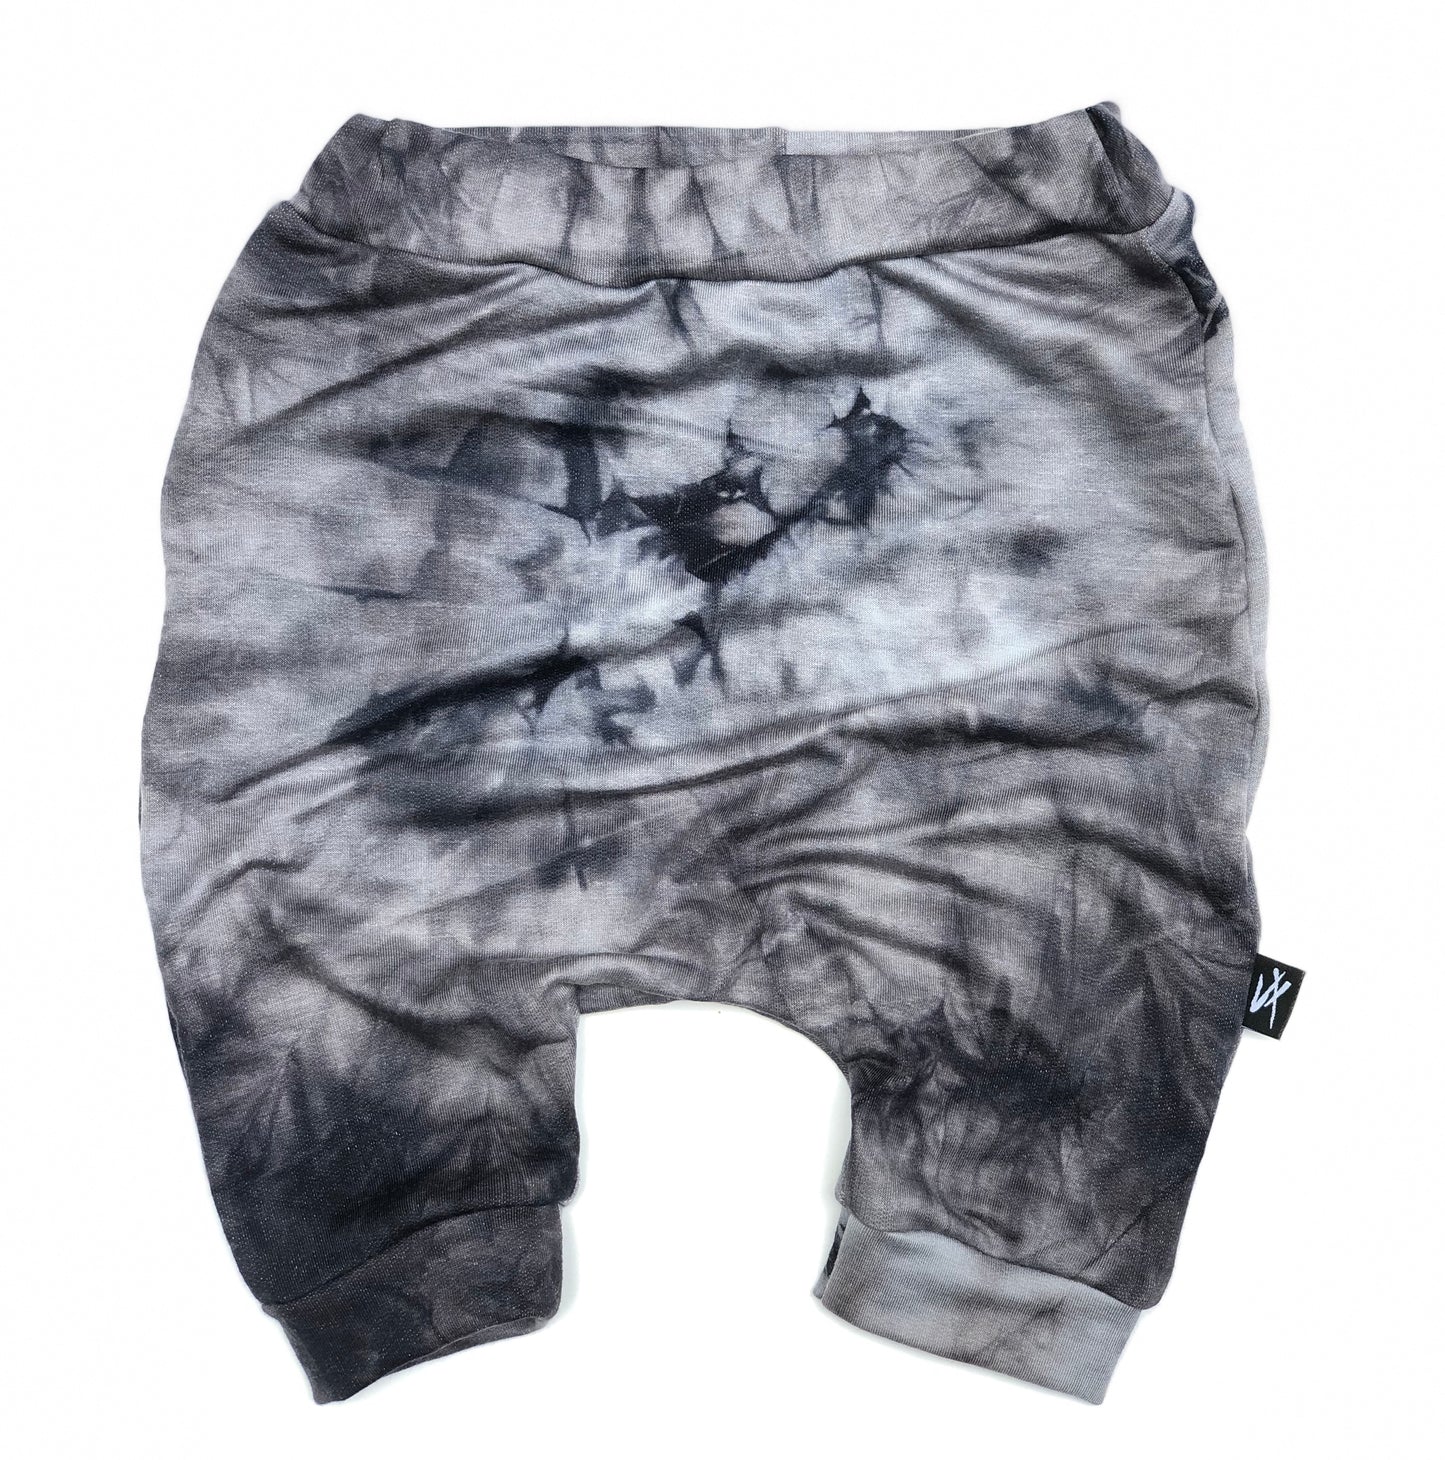 RTS Charcoal Tie Dye Shorts